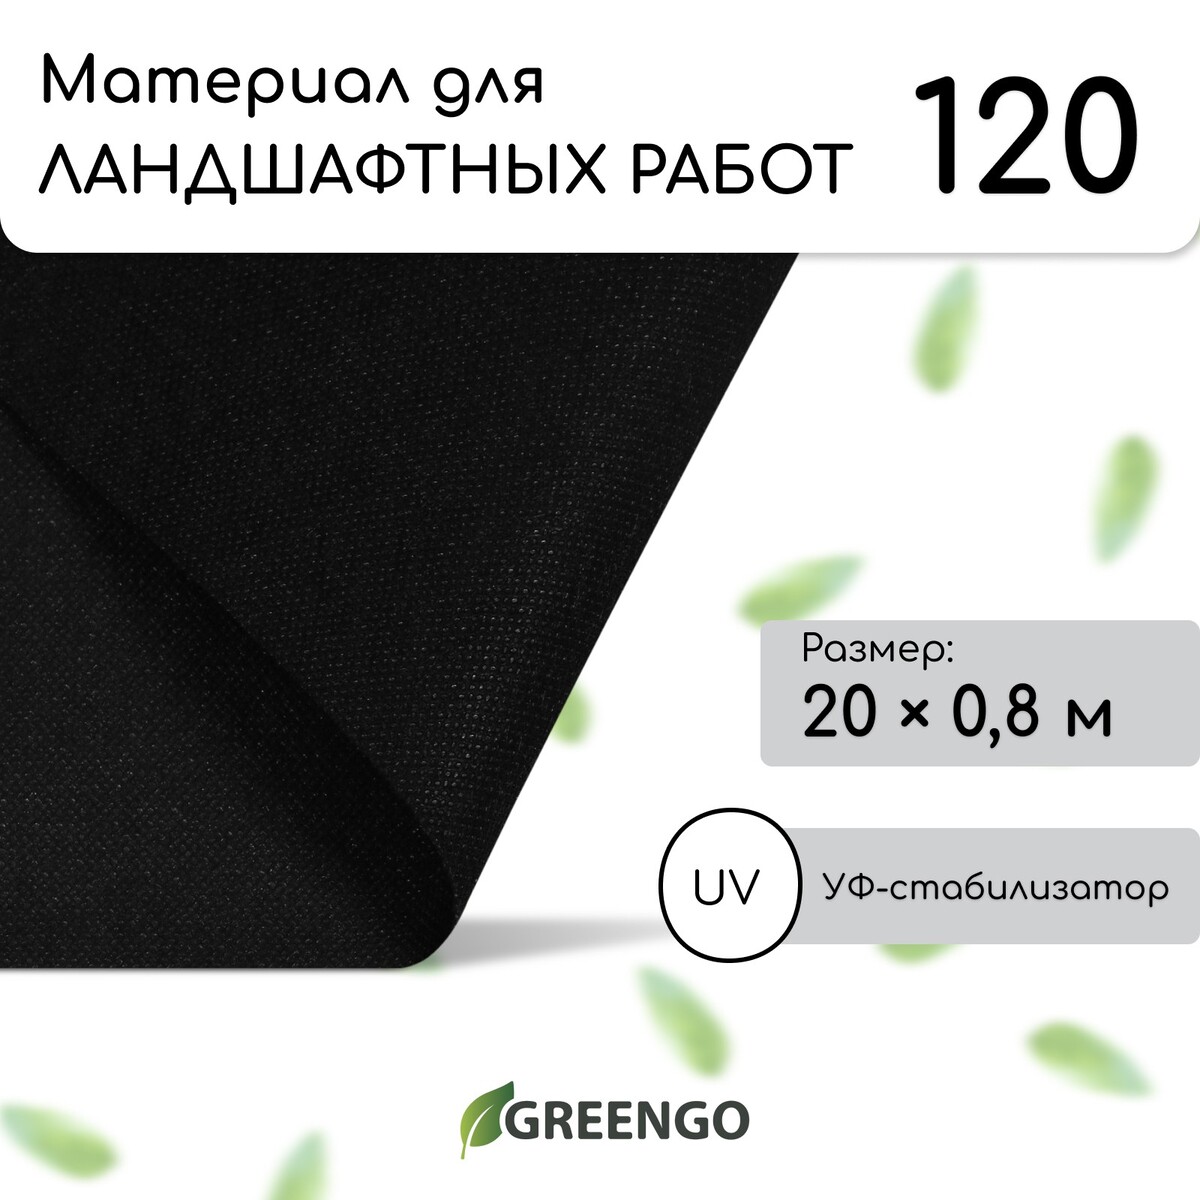    , 20   0, 8 ,  120 / ,   -, , greengo,  20 %